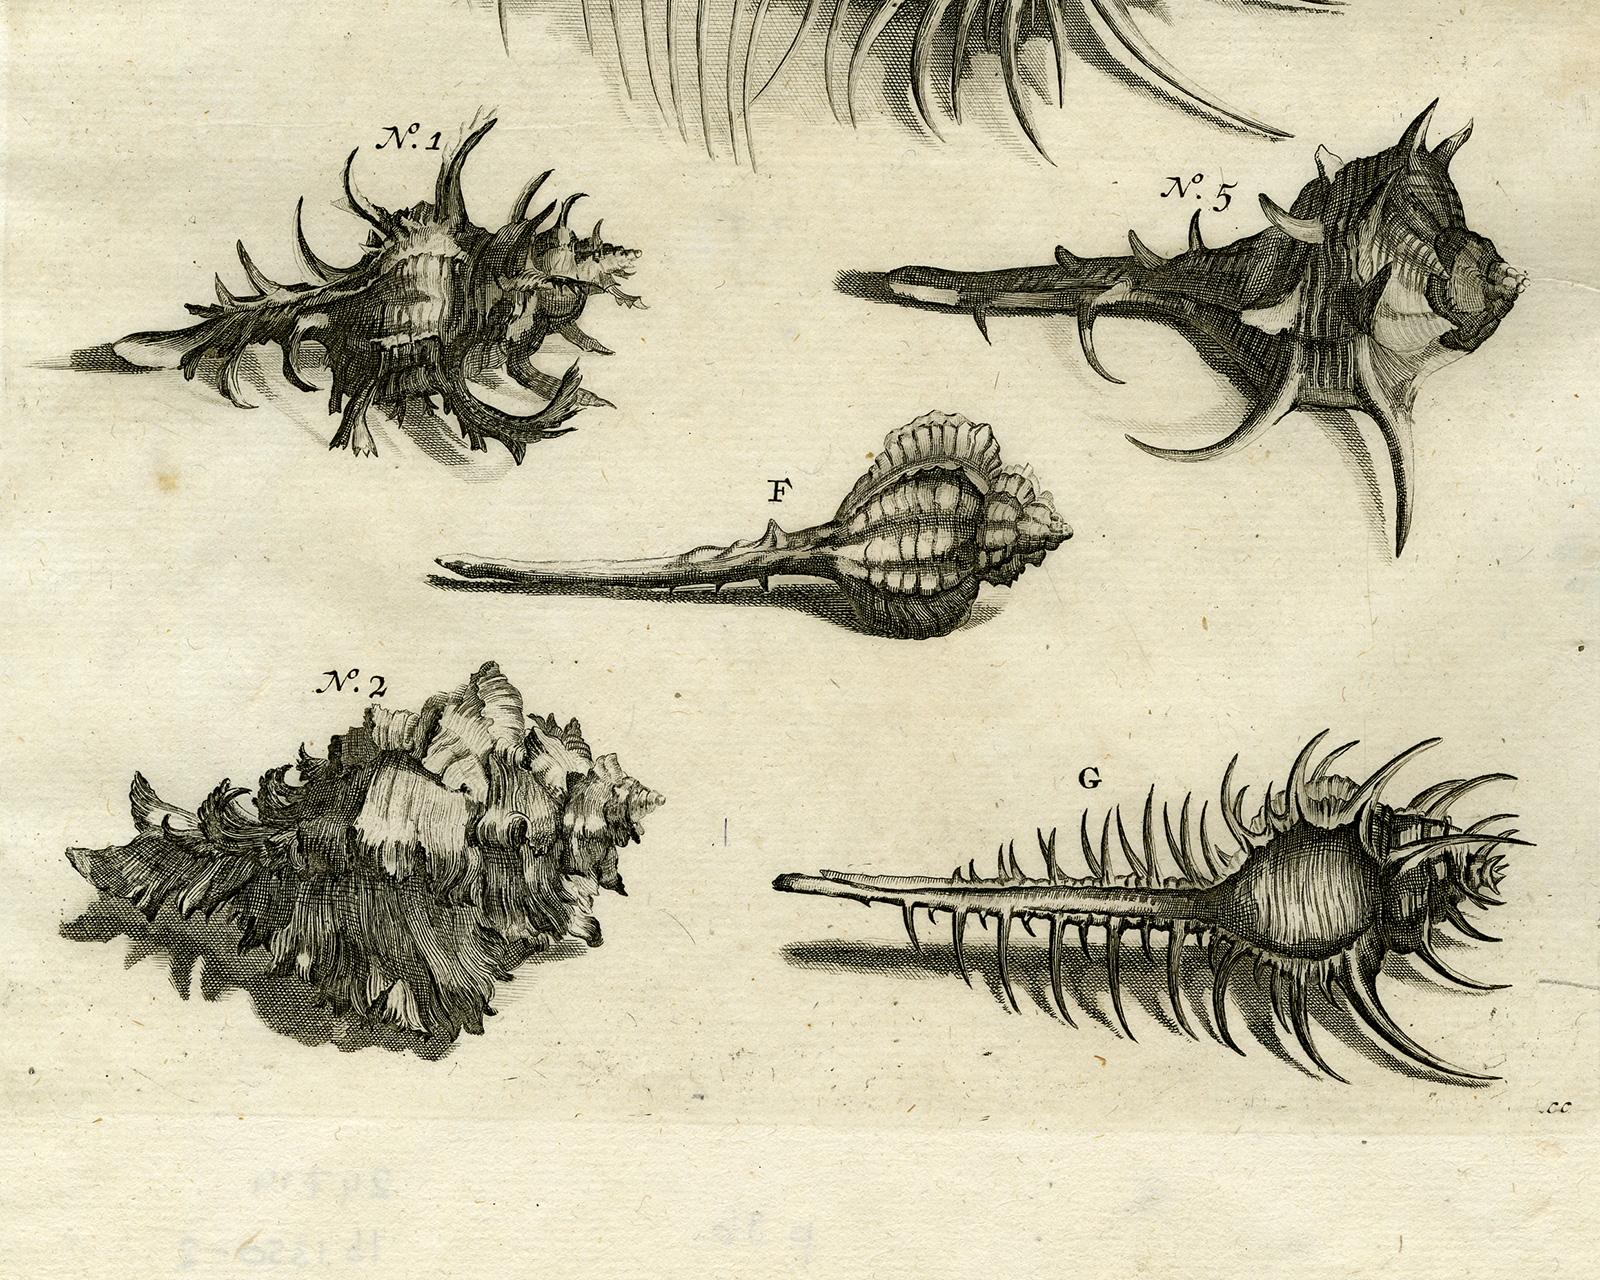 Snail and Mollusks - Ambonian Cabinet of Curiosities by Rumphius - 18th c. - Beige Animal Print by Jorg Eberhardt Rumph